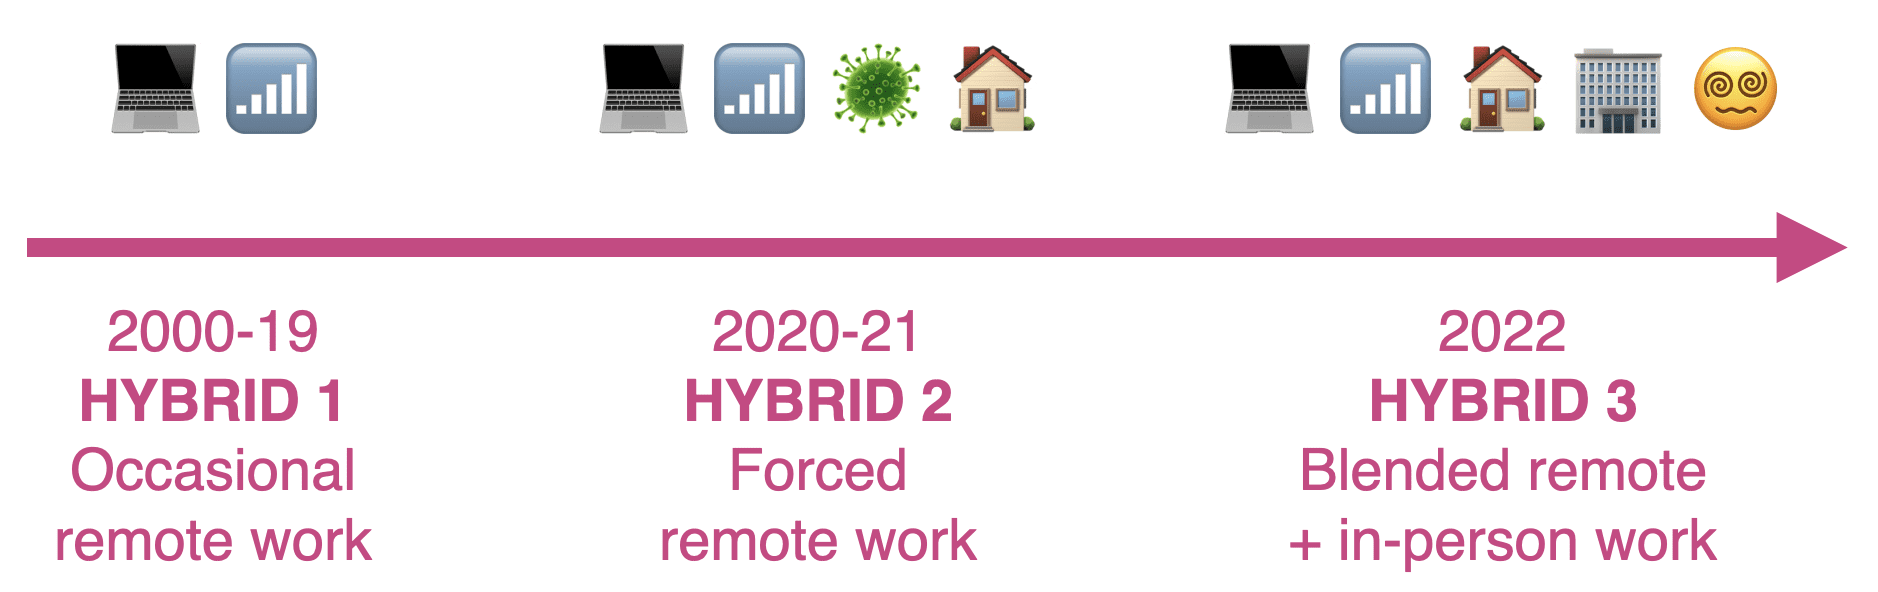 Hybrid working